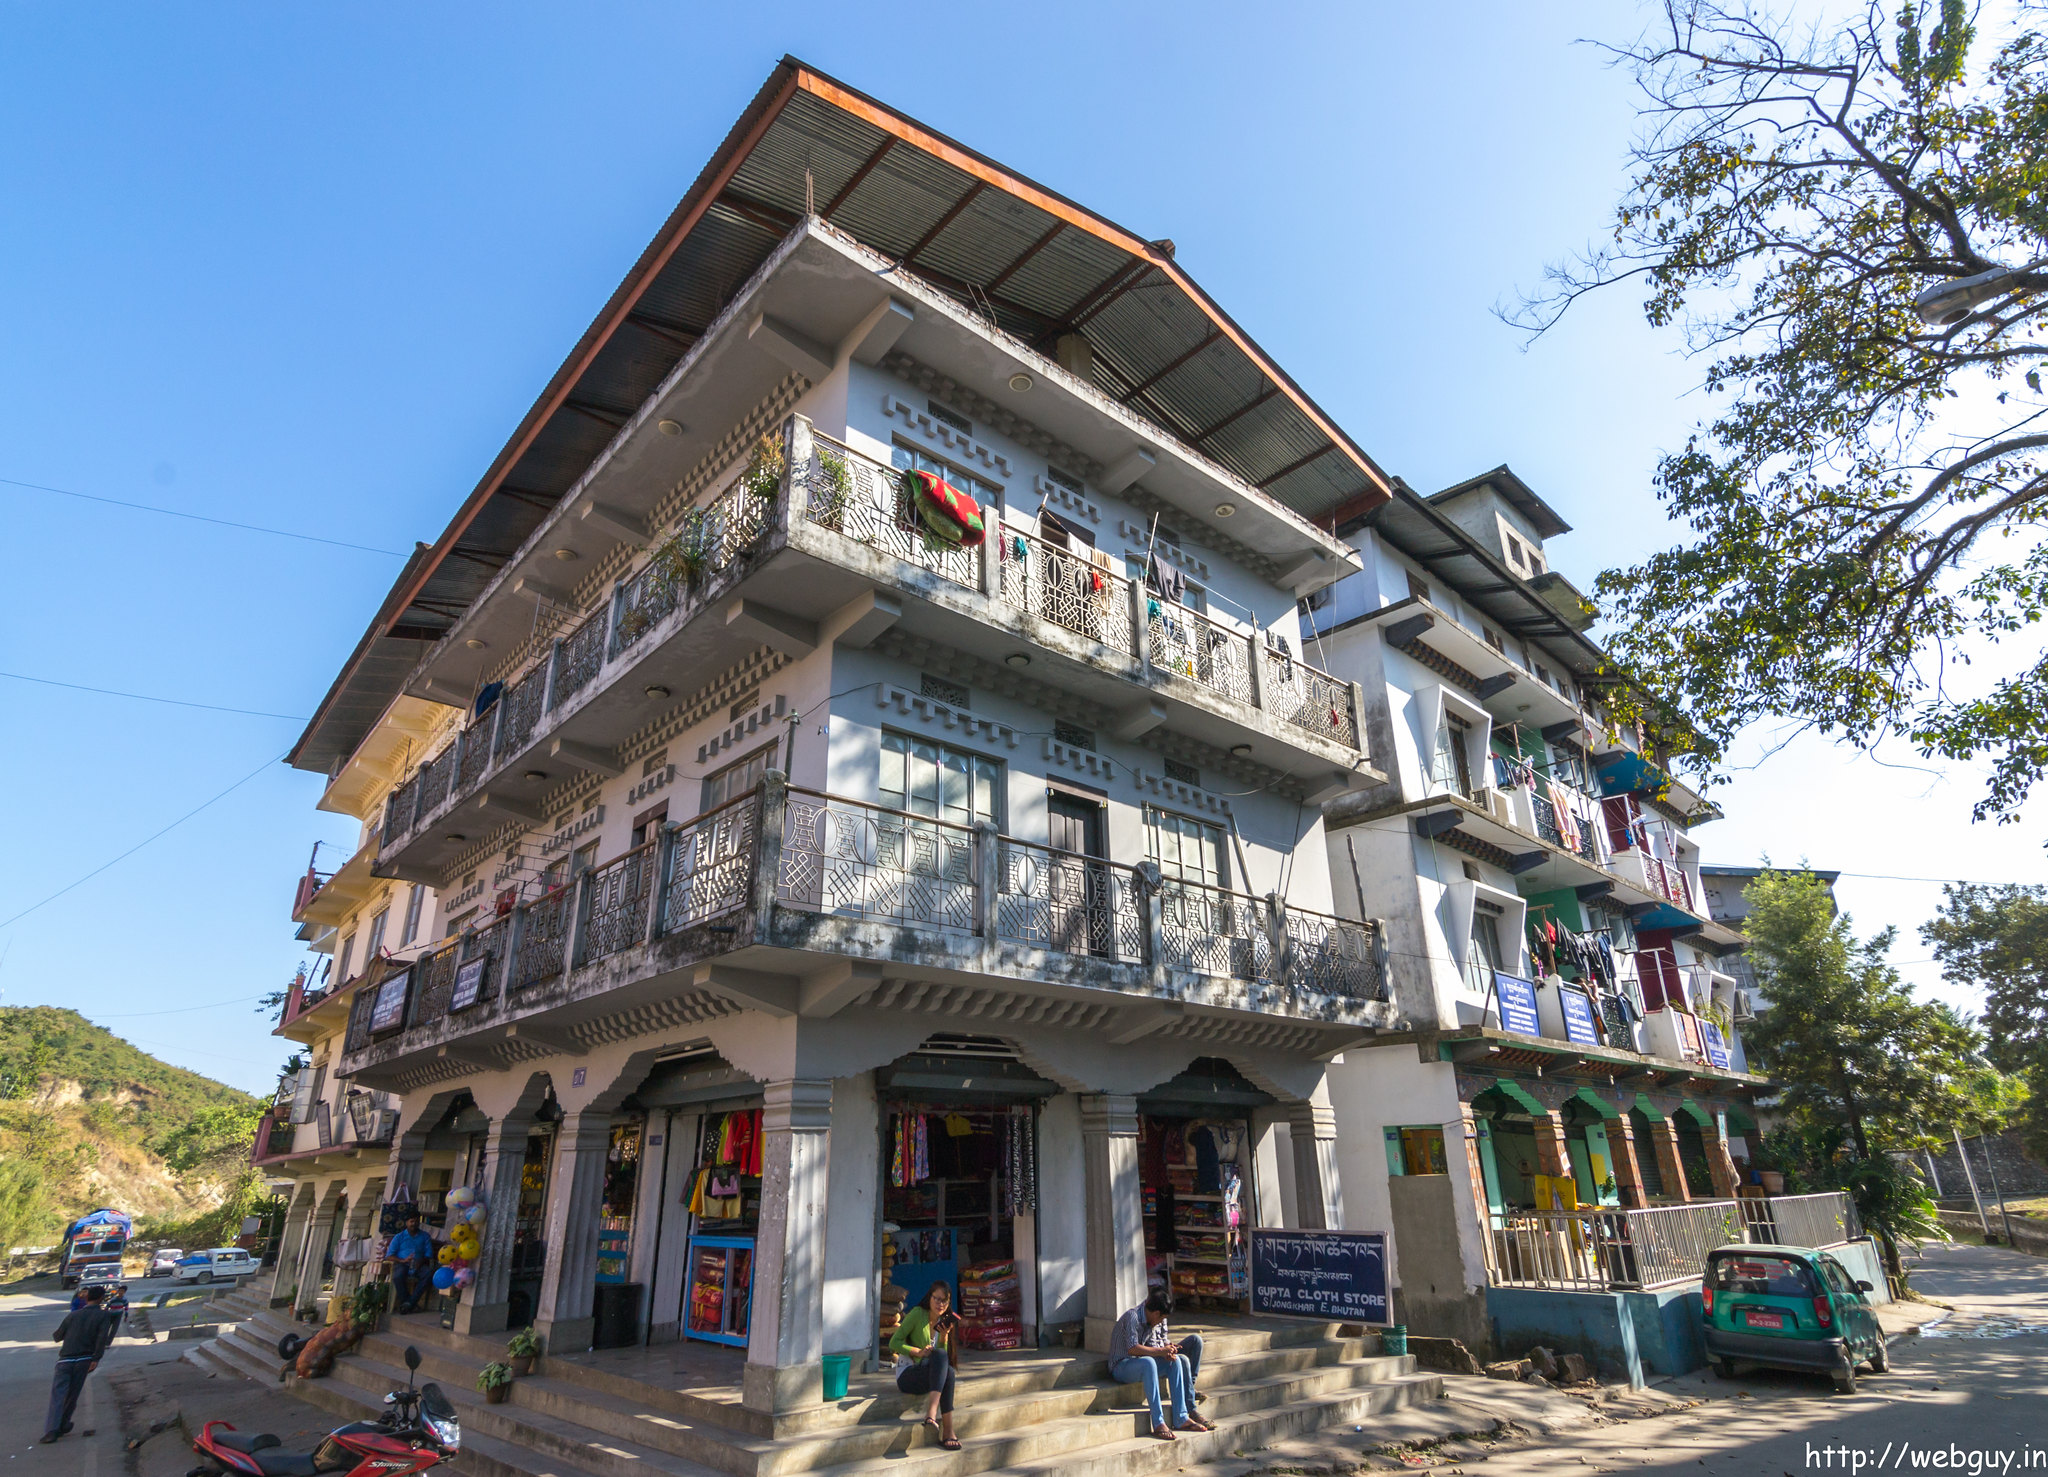 A beautiful building housing shops and apartments - Samdrup Jonkhar